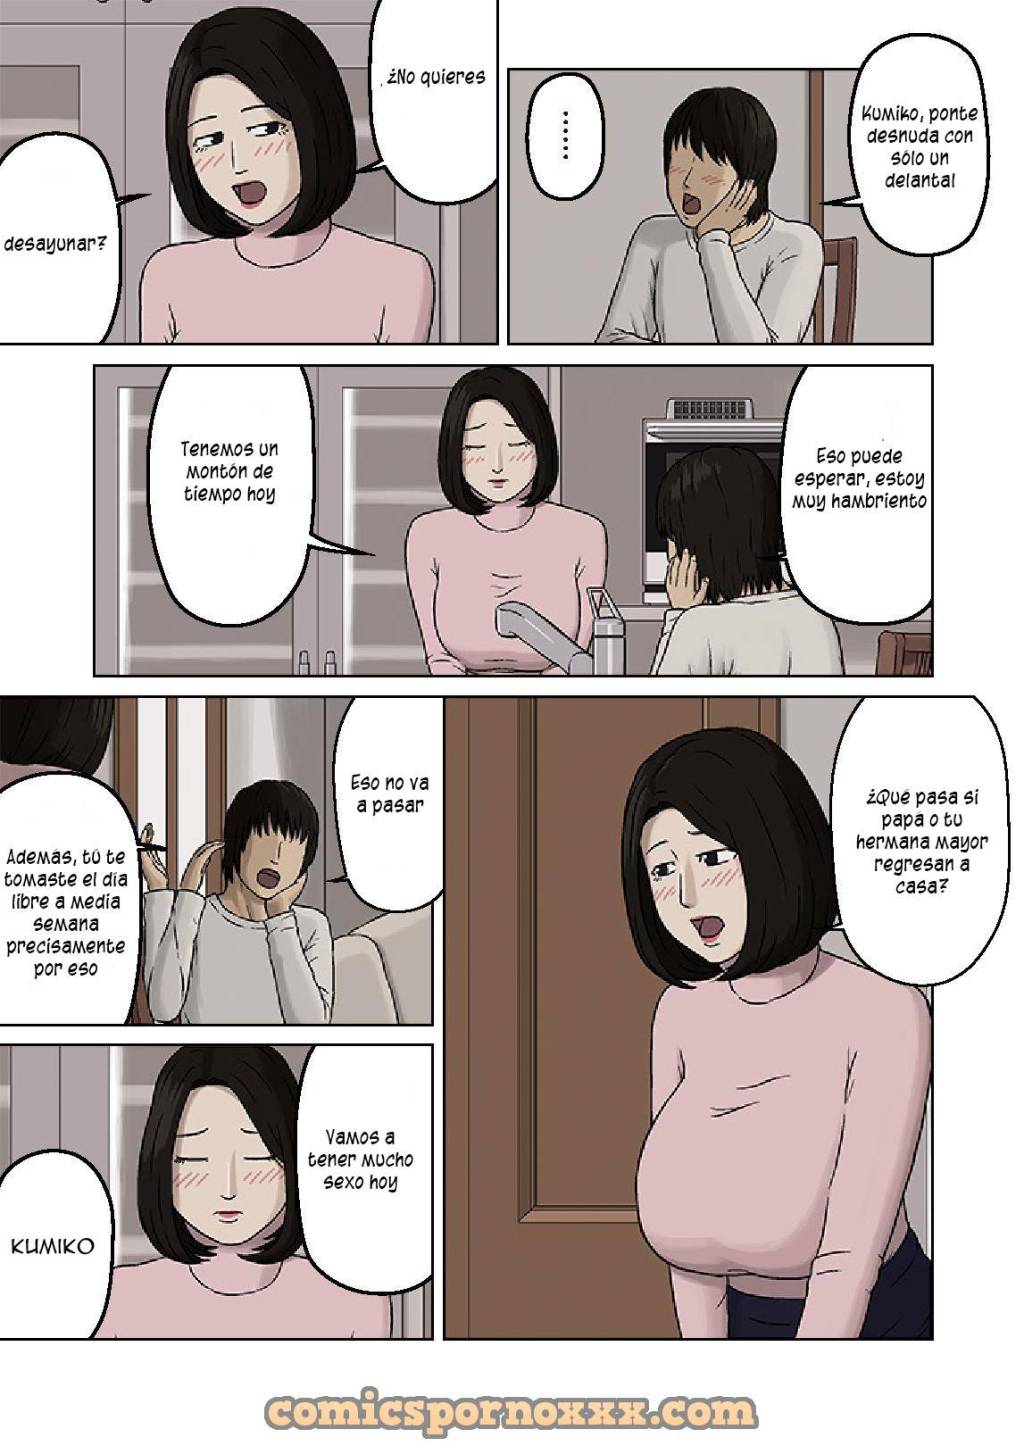 Kumiko And Her Naughty Son - 6 - Comics Porno - Hentai Manga - Cartoon XXX